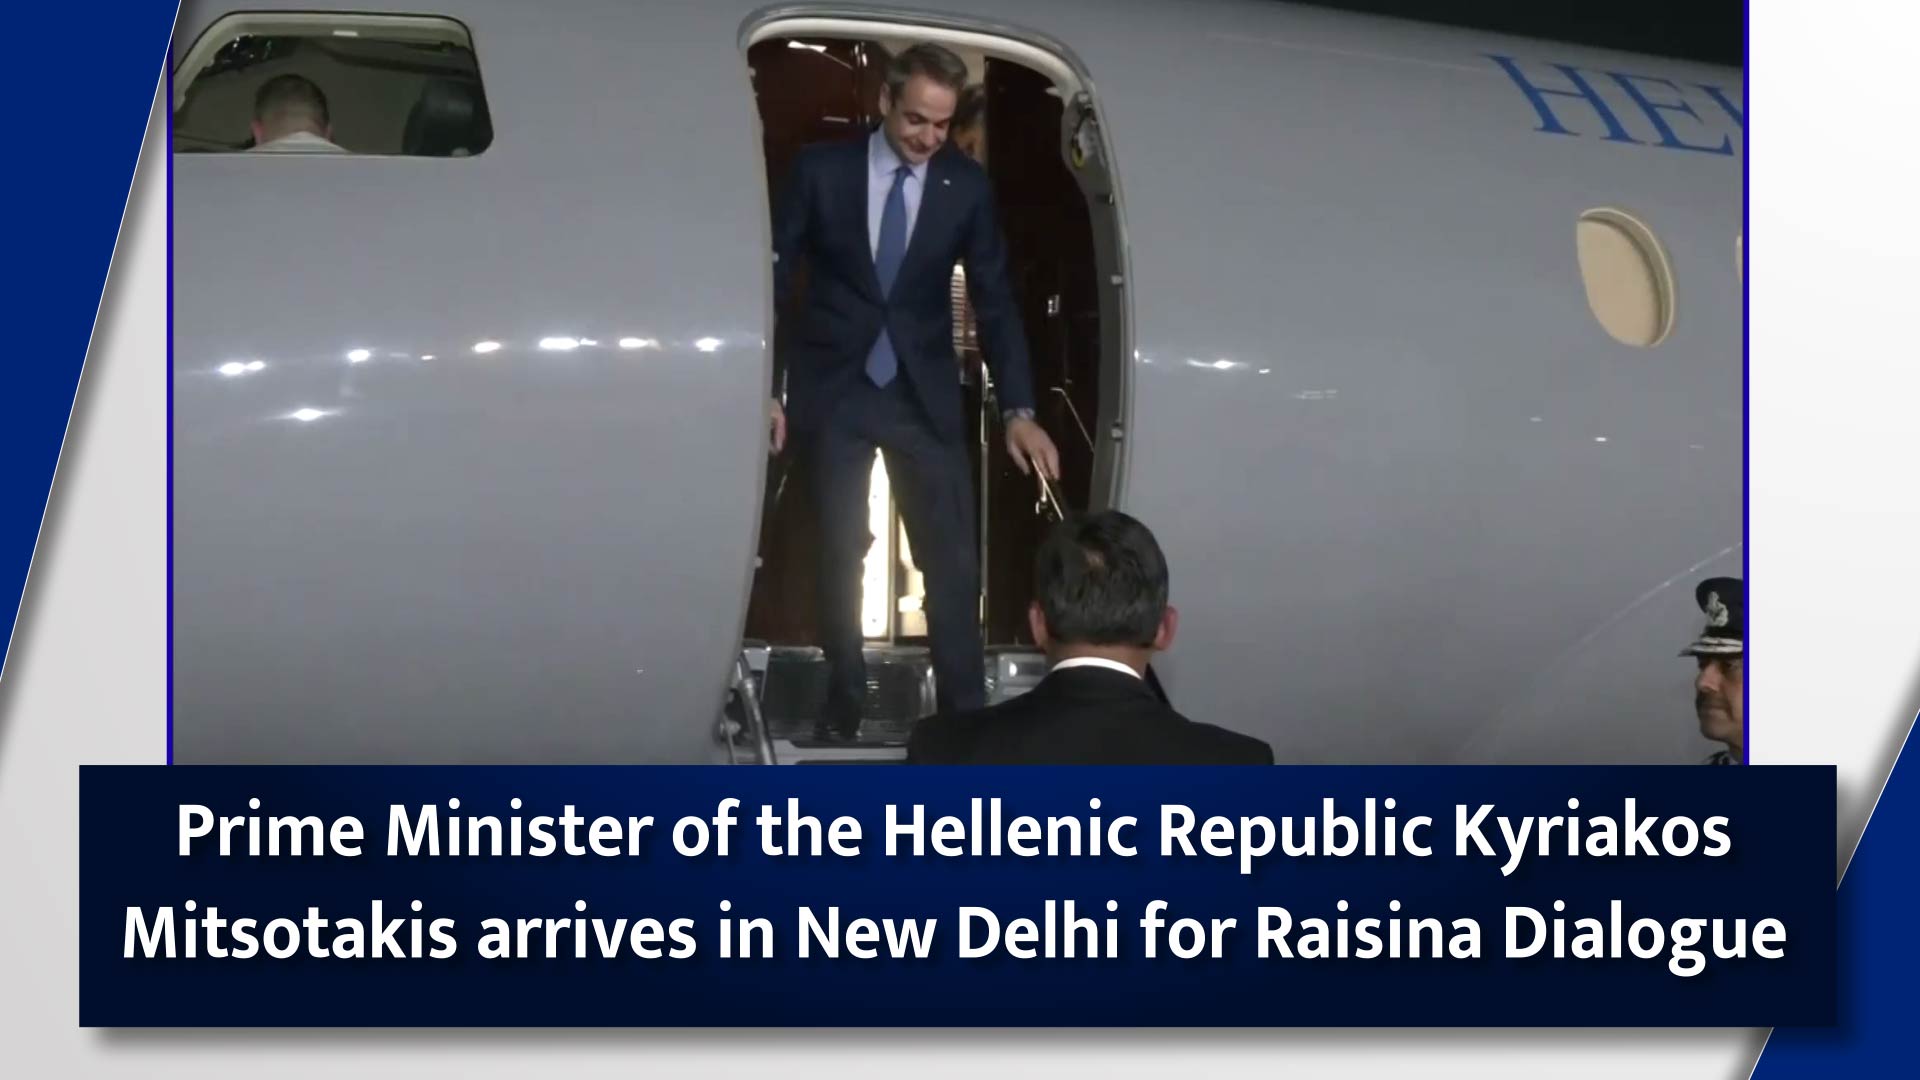 Prime Minister of the Hellenic Republic Kyriakos Mitsotakis arrives in New Delhi for Raisina Dialogue